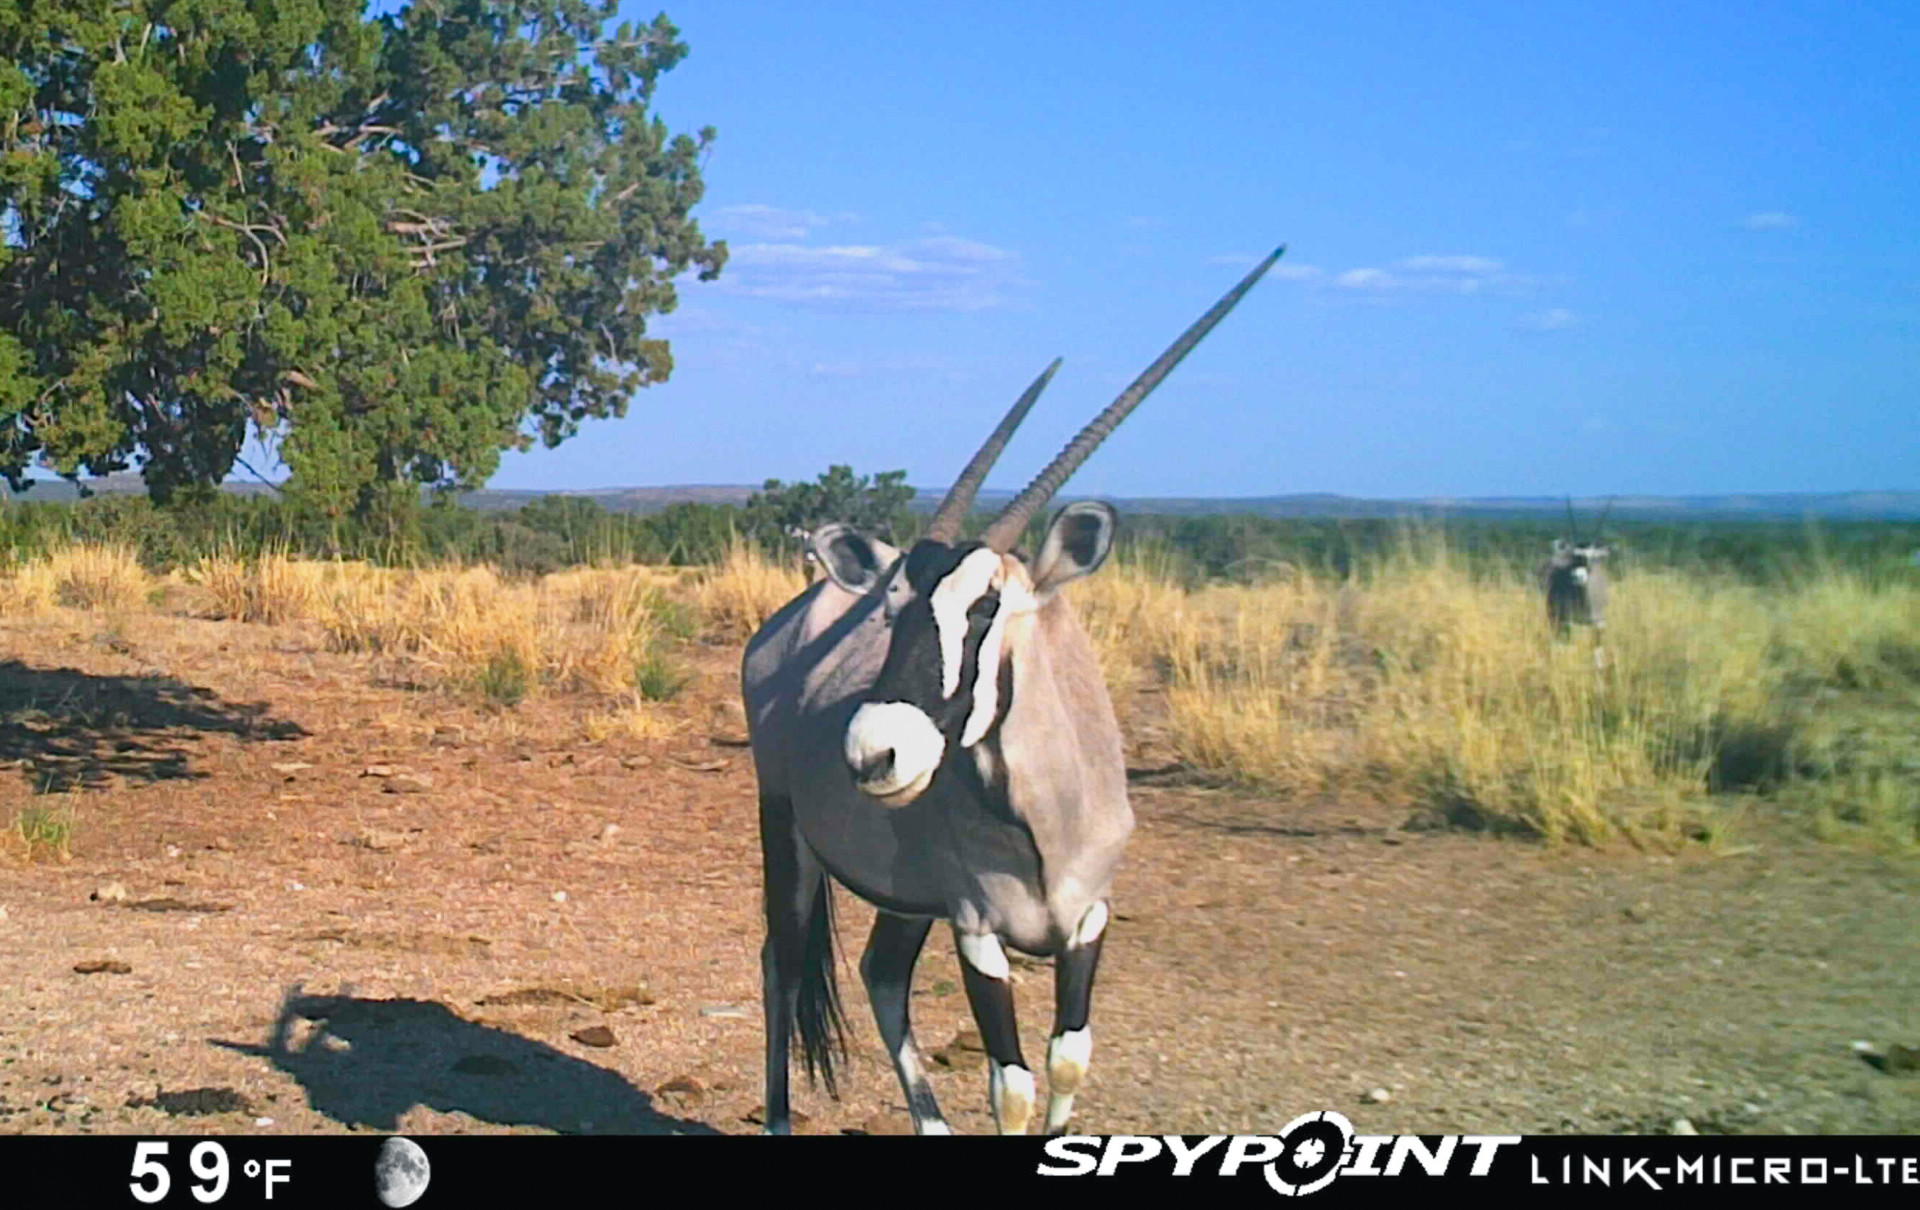 oryx face game cam socorro county new mexico chupadera ranch